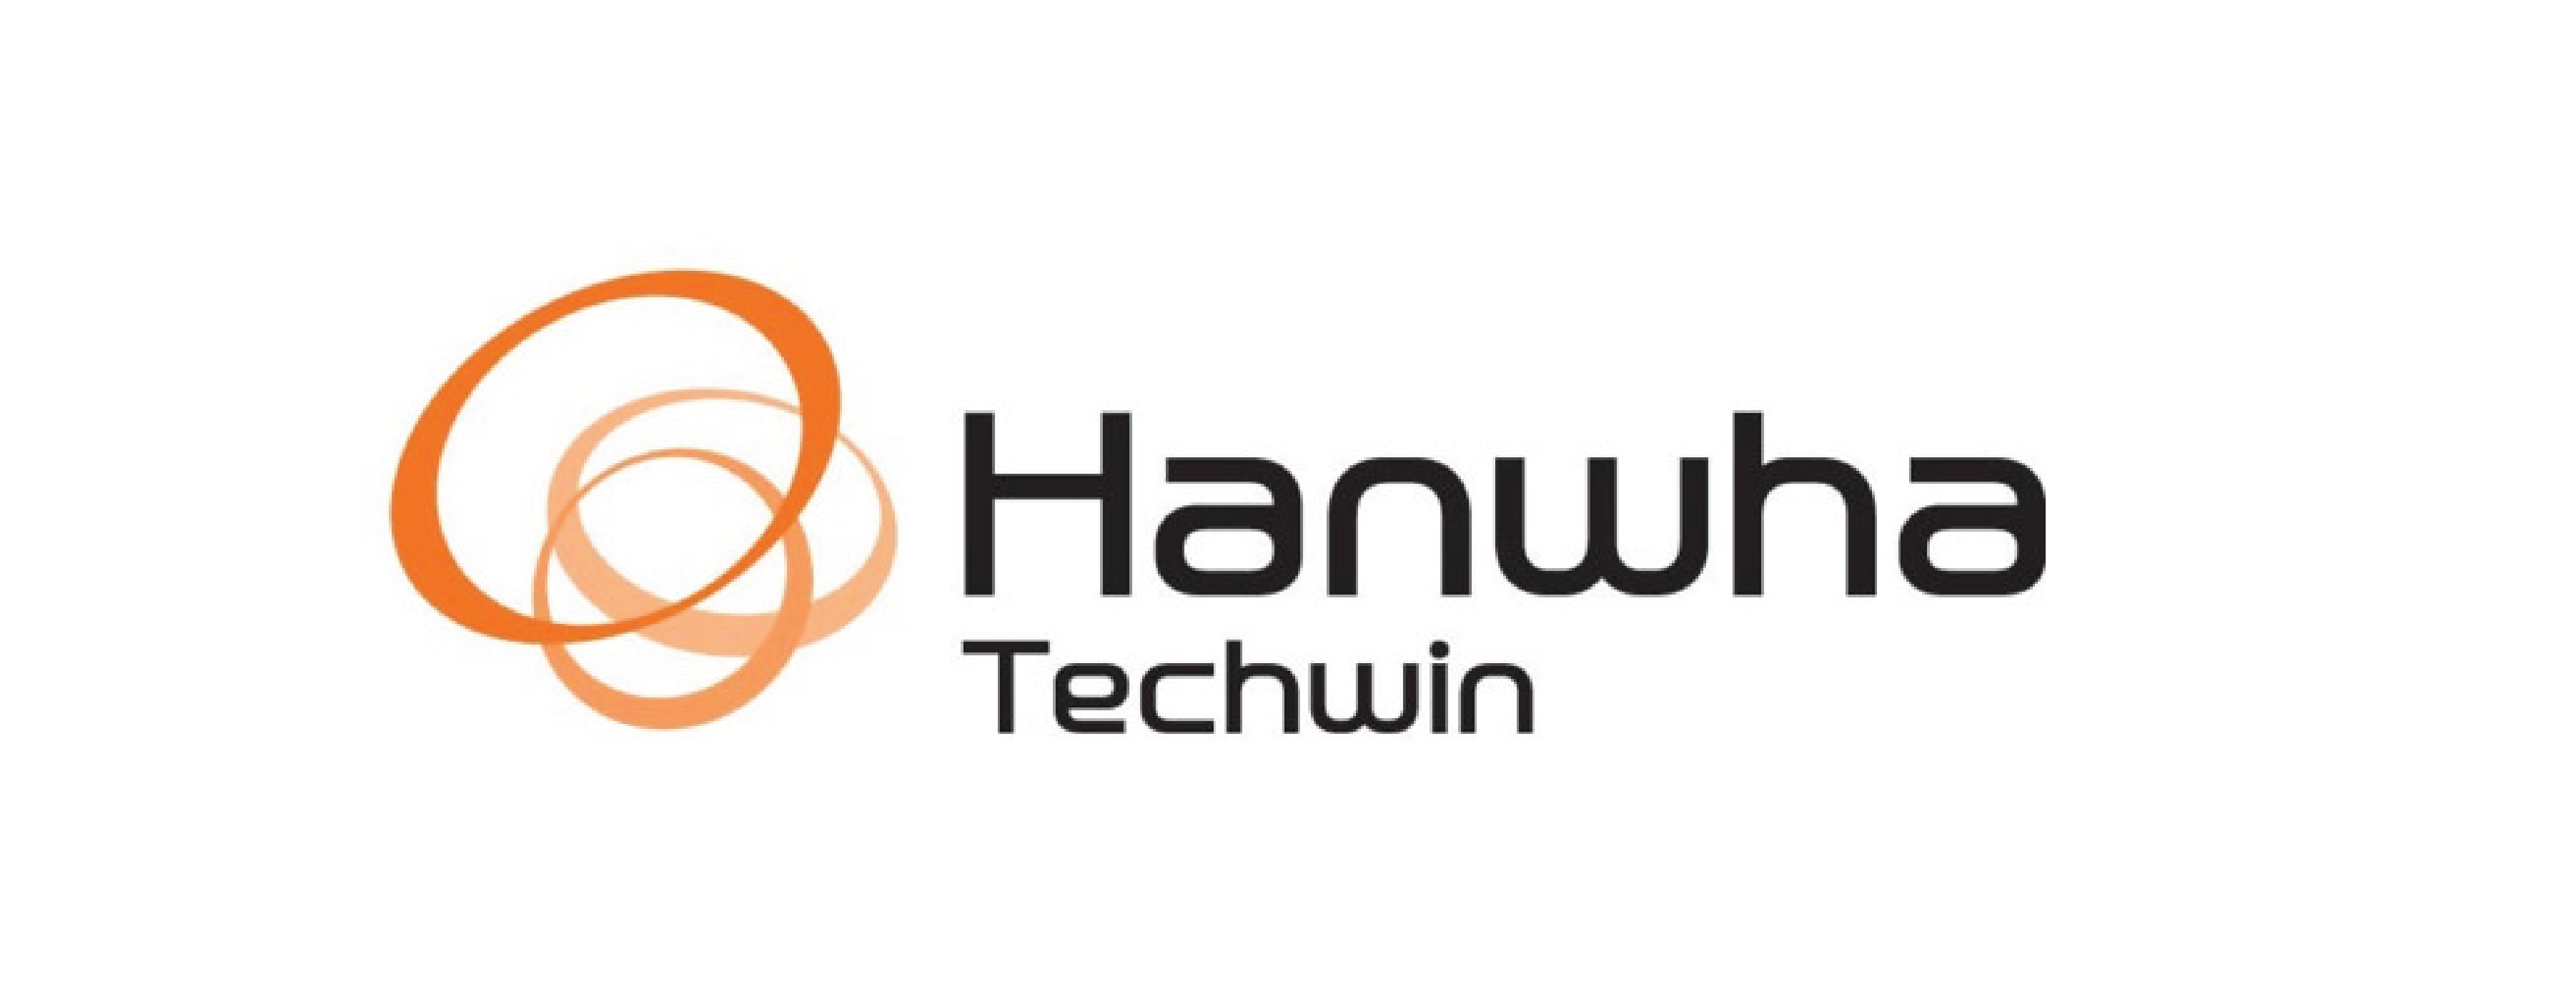 0-Hanwha